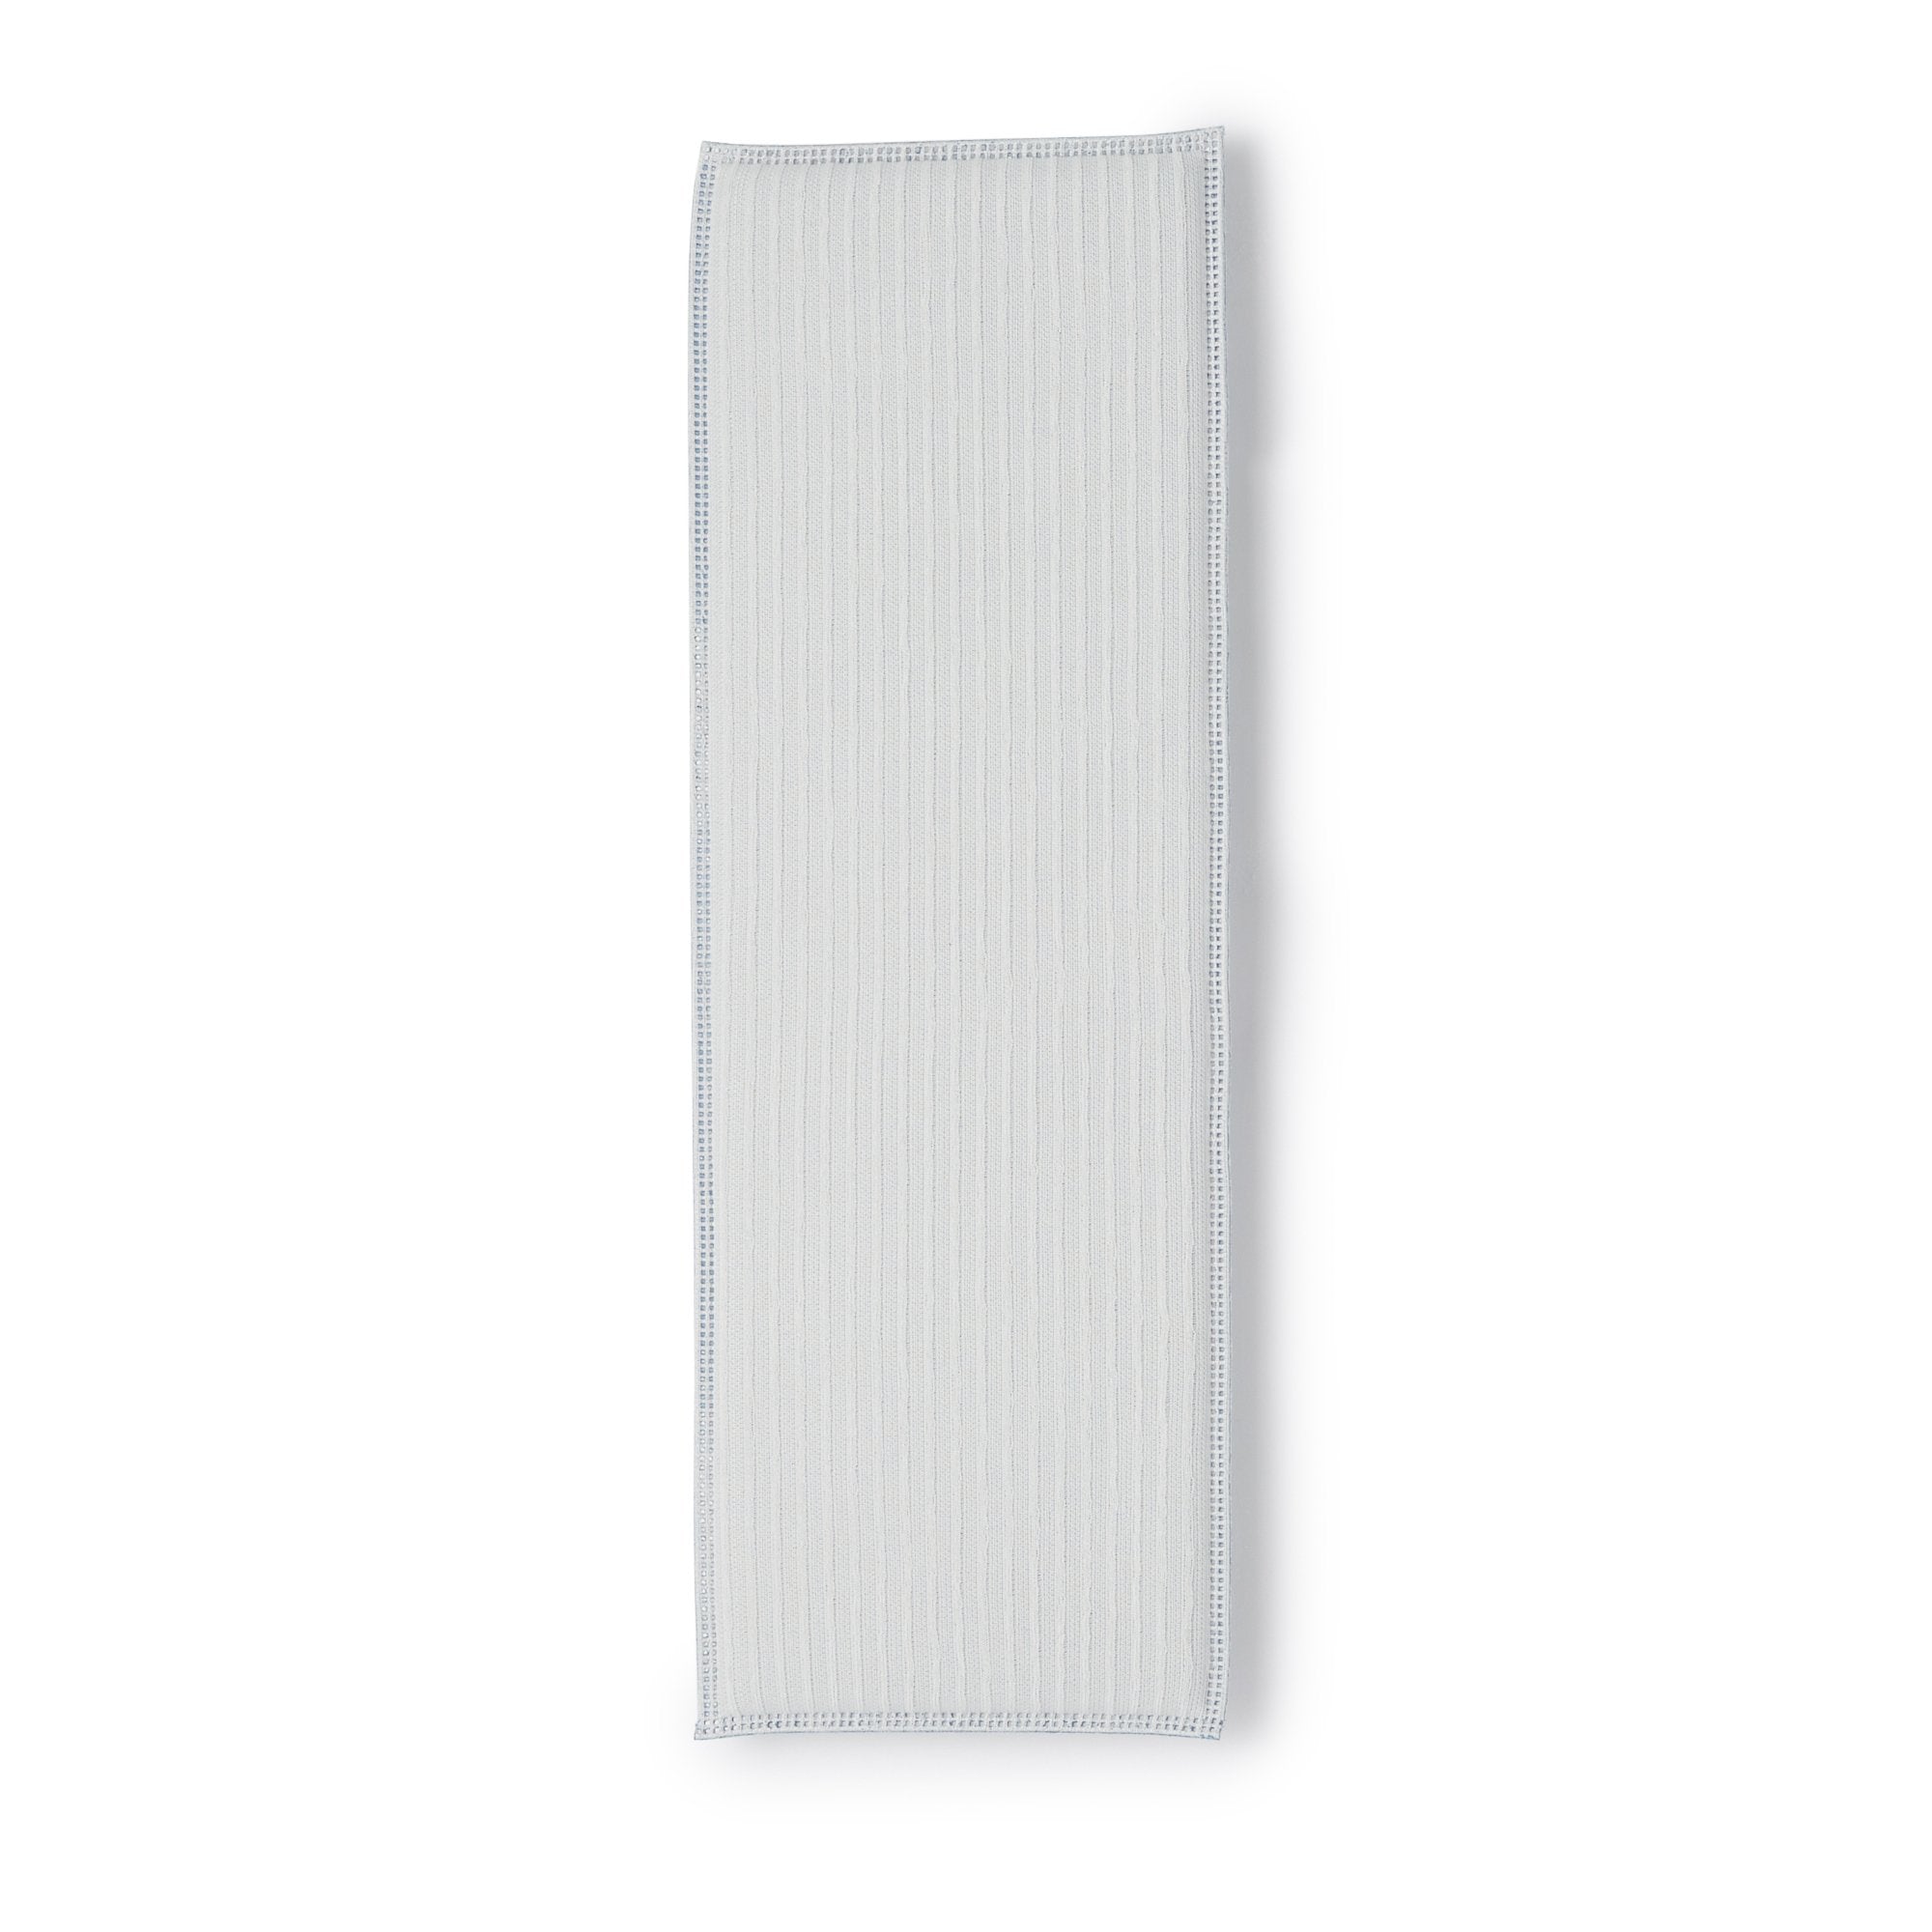 Cleanroom Wet Mop Pad Contec Klean Max Sealed Edge Medium White Microfiber / Polyester Disposable